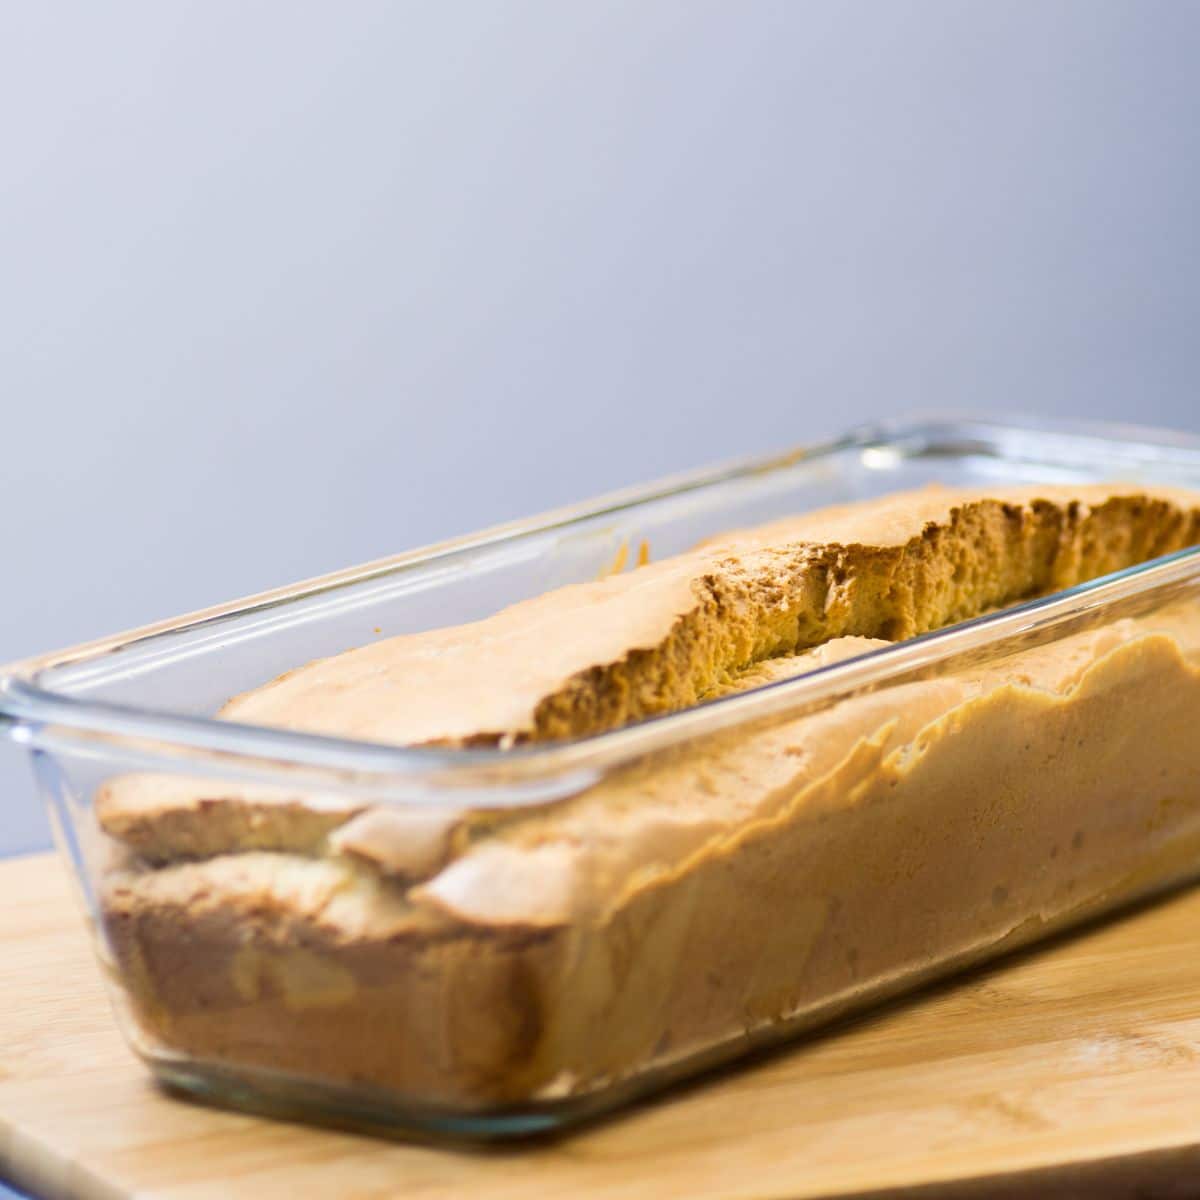 keto bread in a glass pan